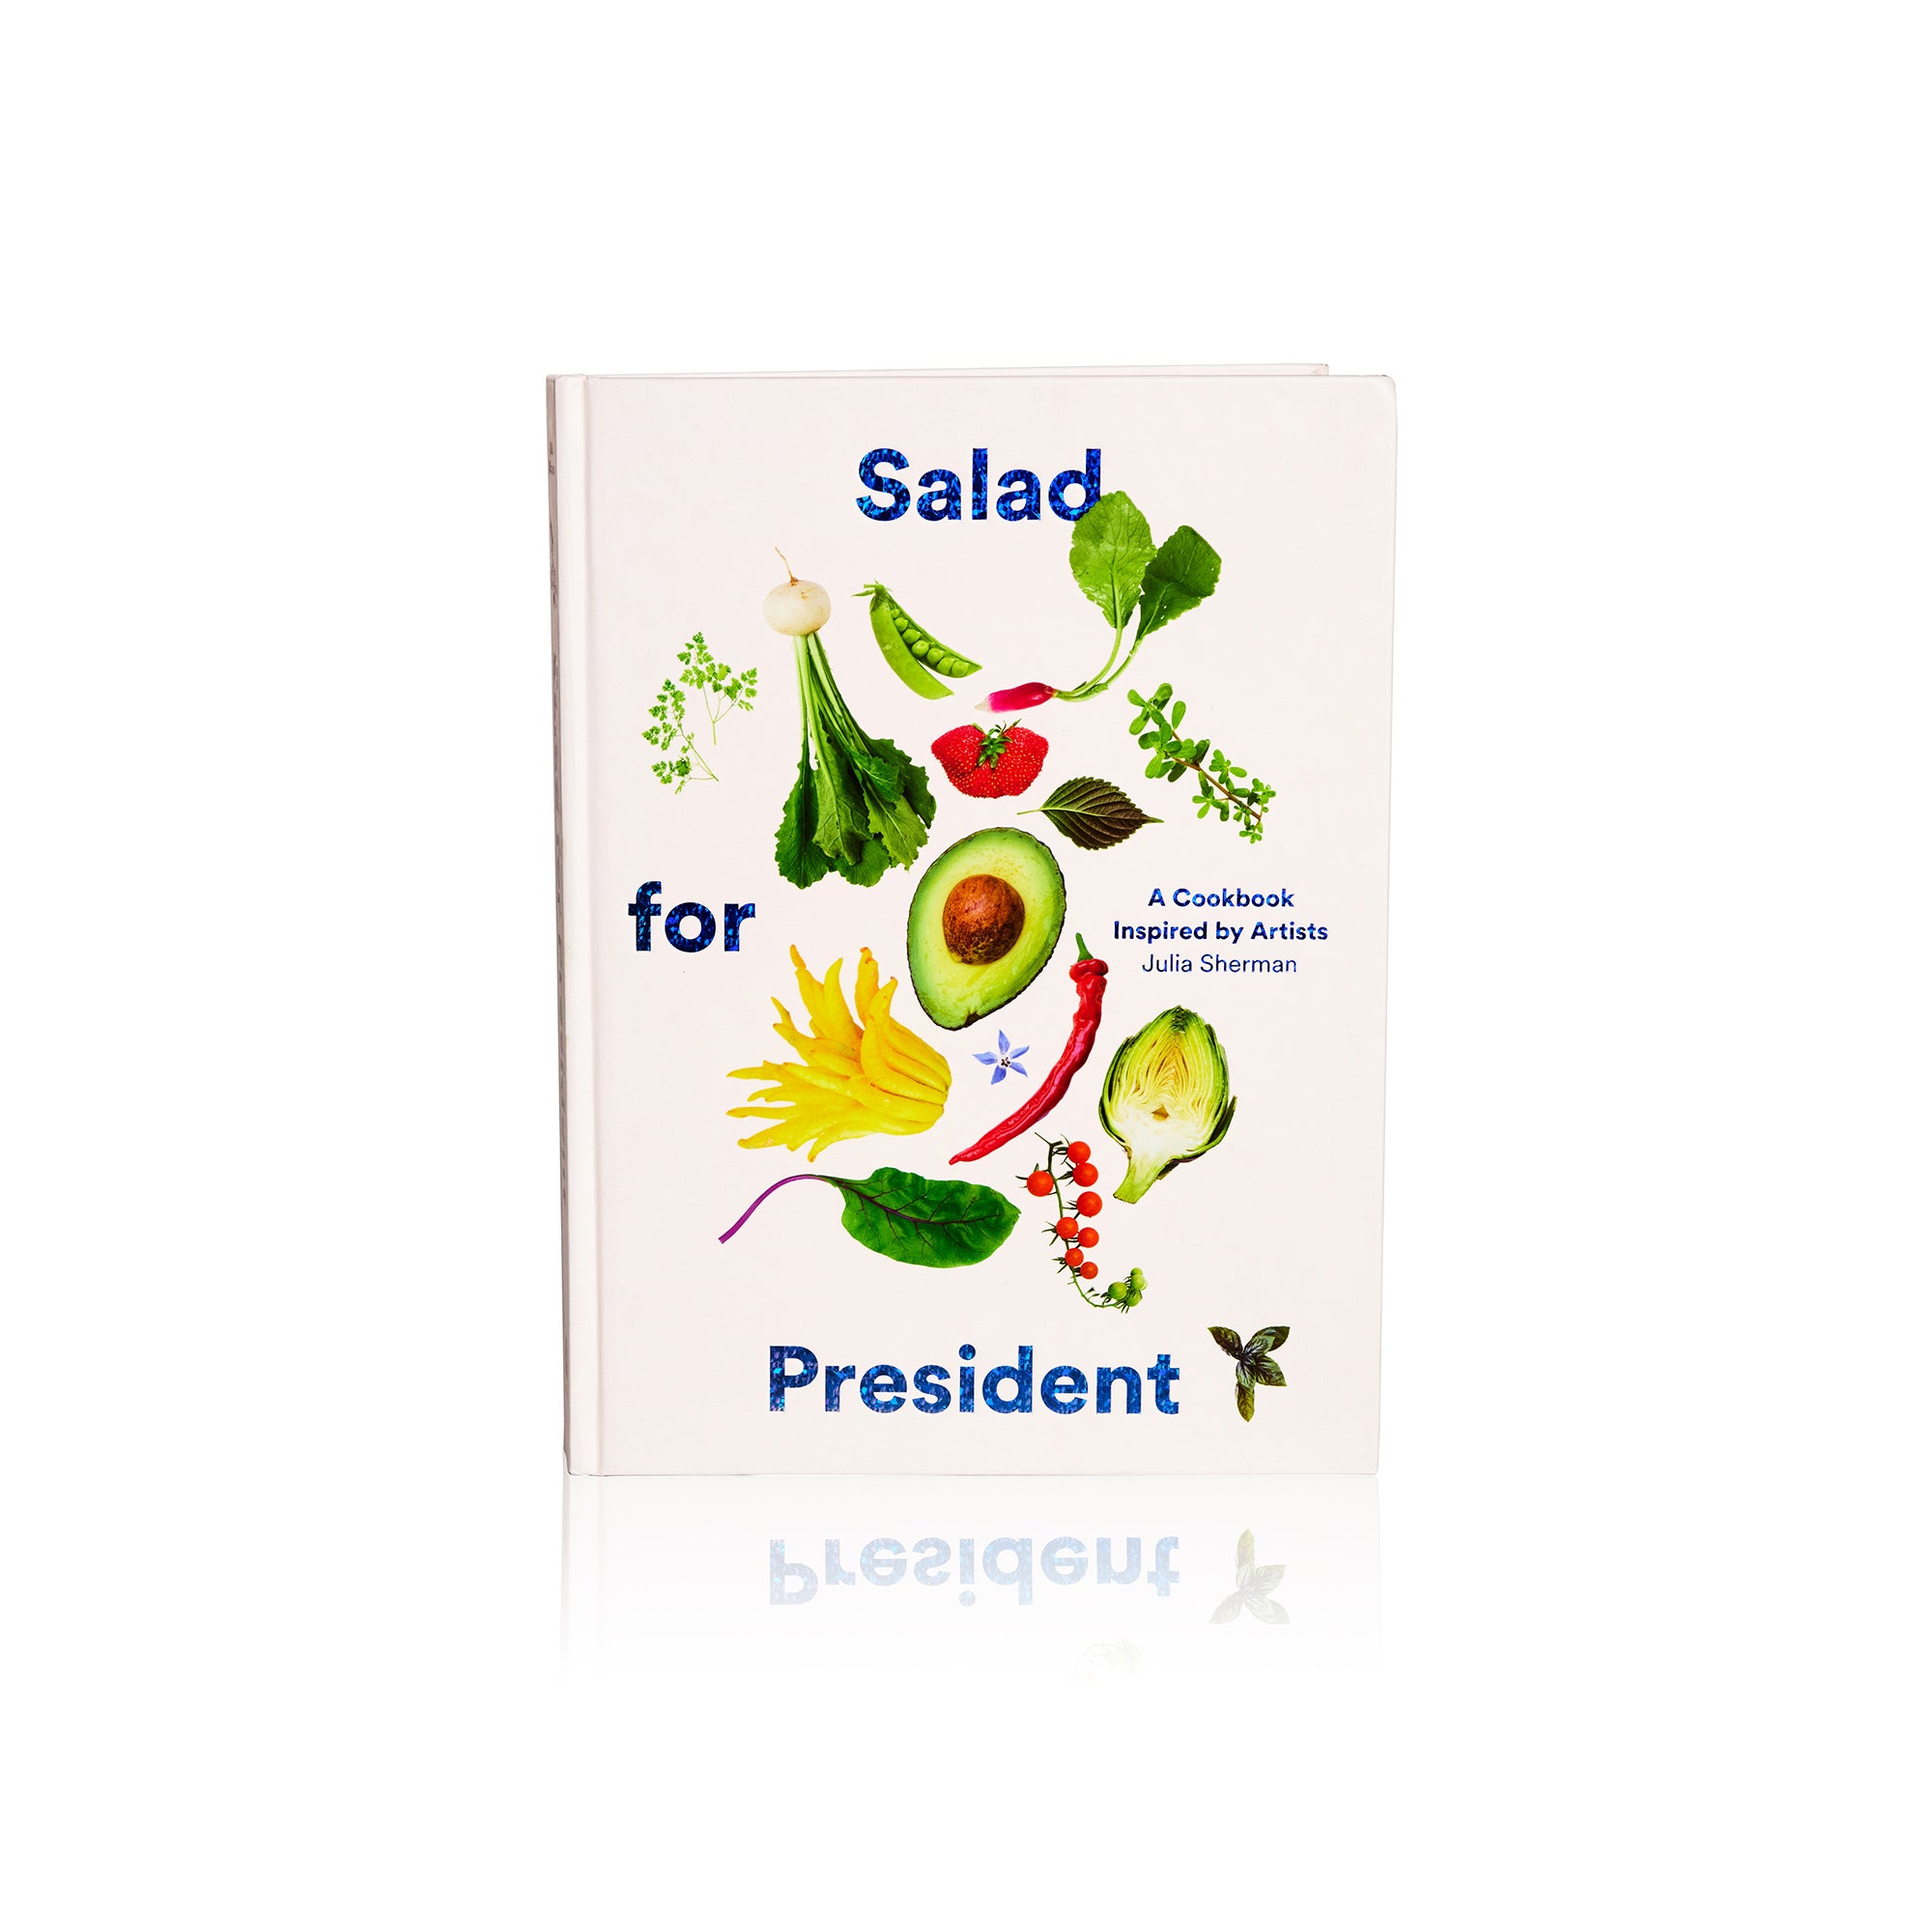 Salad for President by Julia Sherman